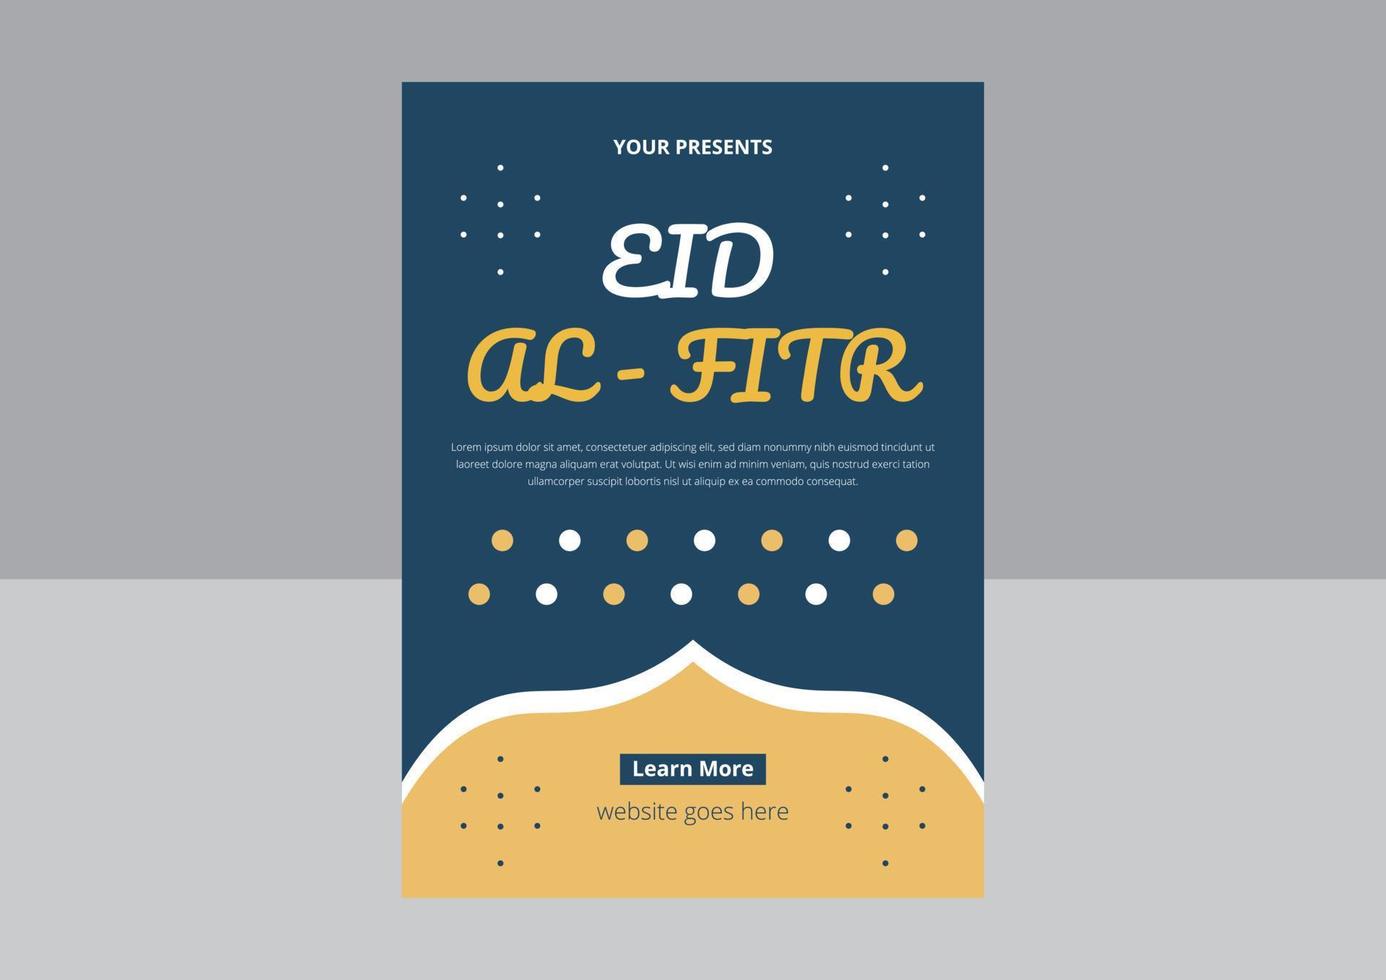 eid mubarak flygblad design. eid al fitr mubarak eller eid al - Adha design, helig dag islamic mall design. omslag, affisch, flygblad design. vektor